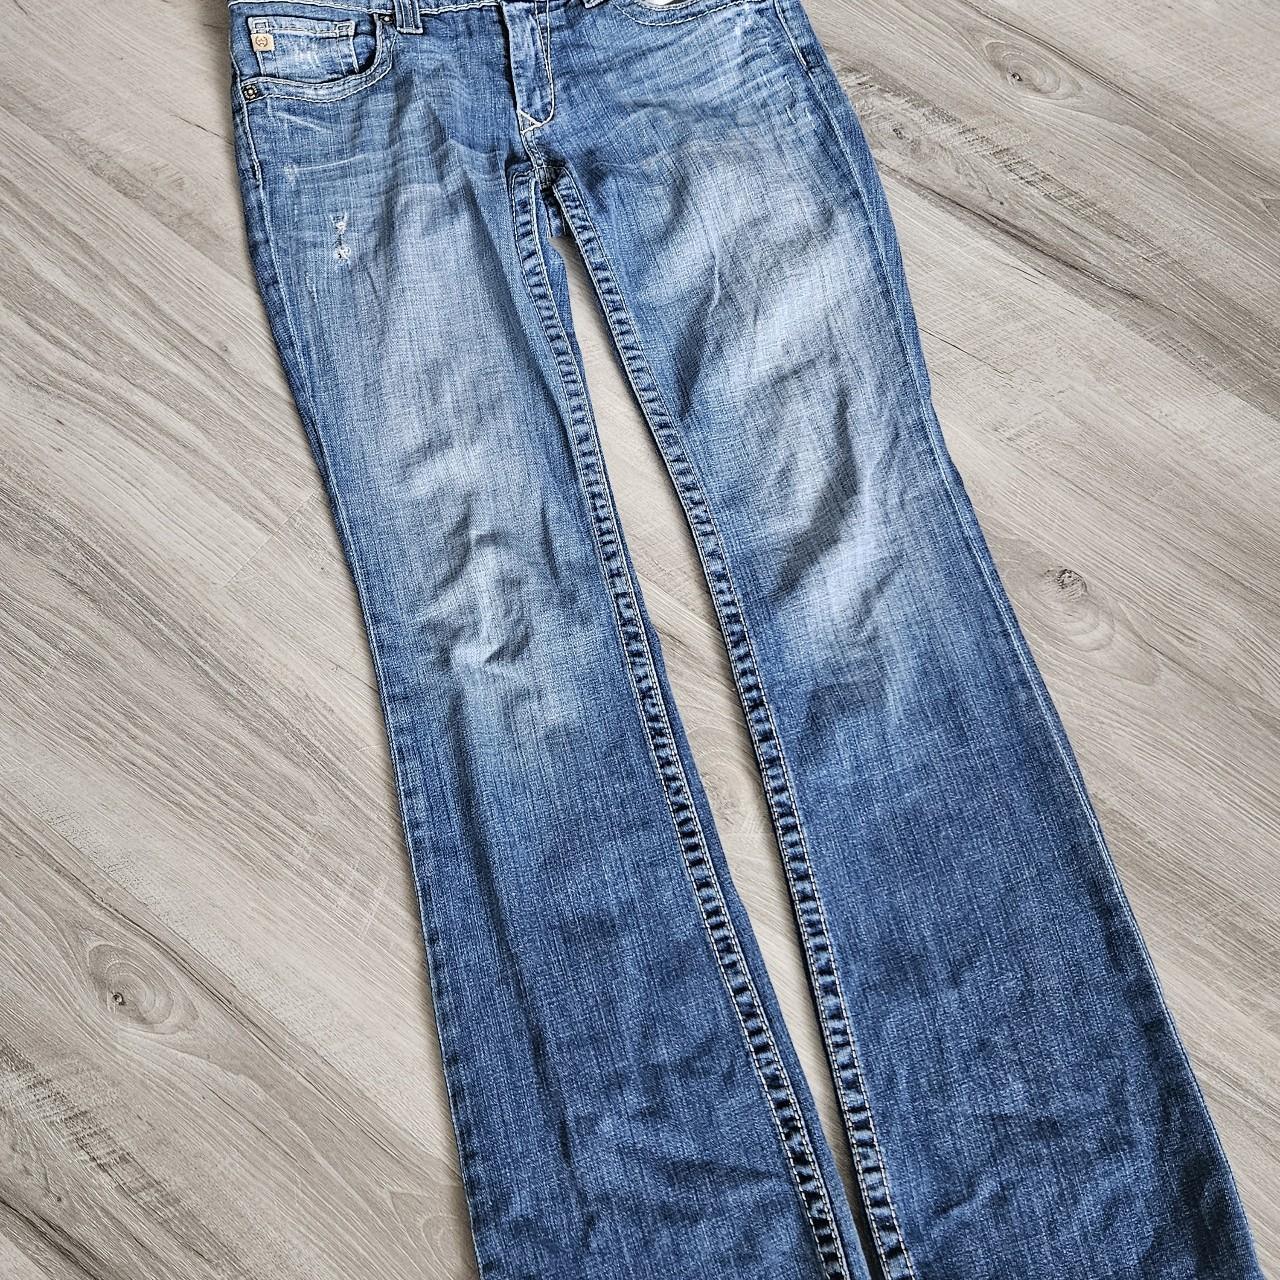 Bigstar Vintage Boot cut Jeans Size 30 -Bought for... - Depop